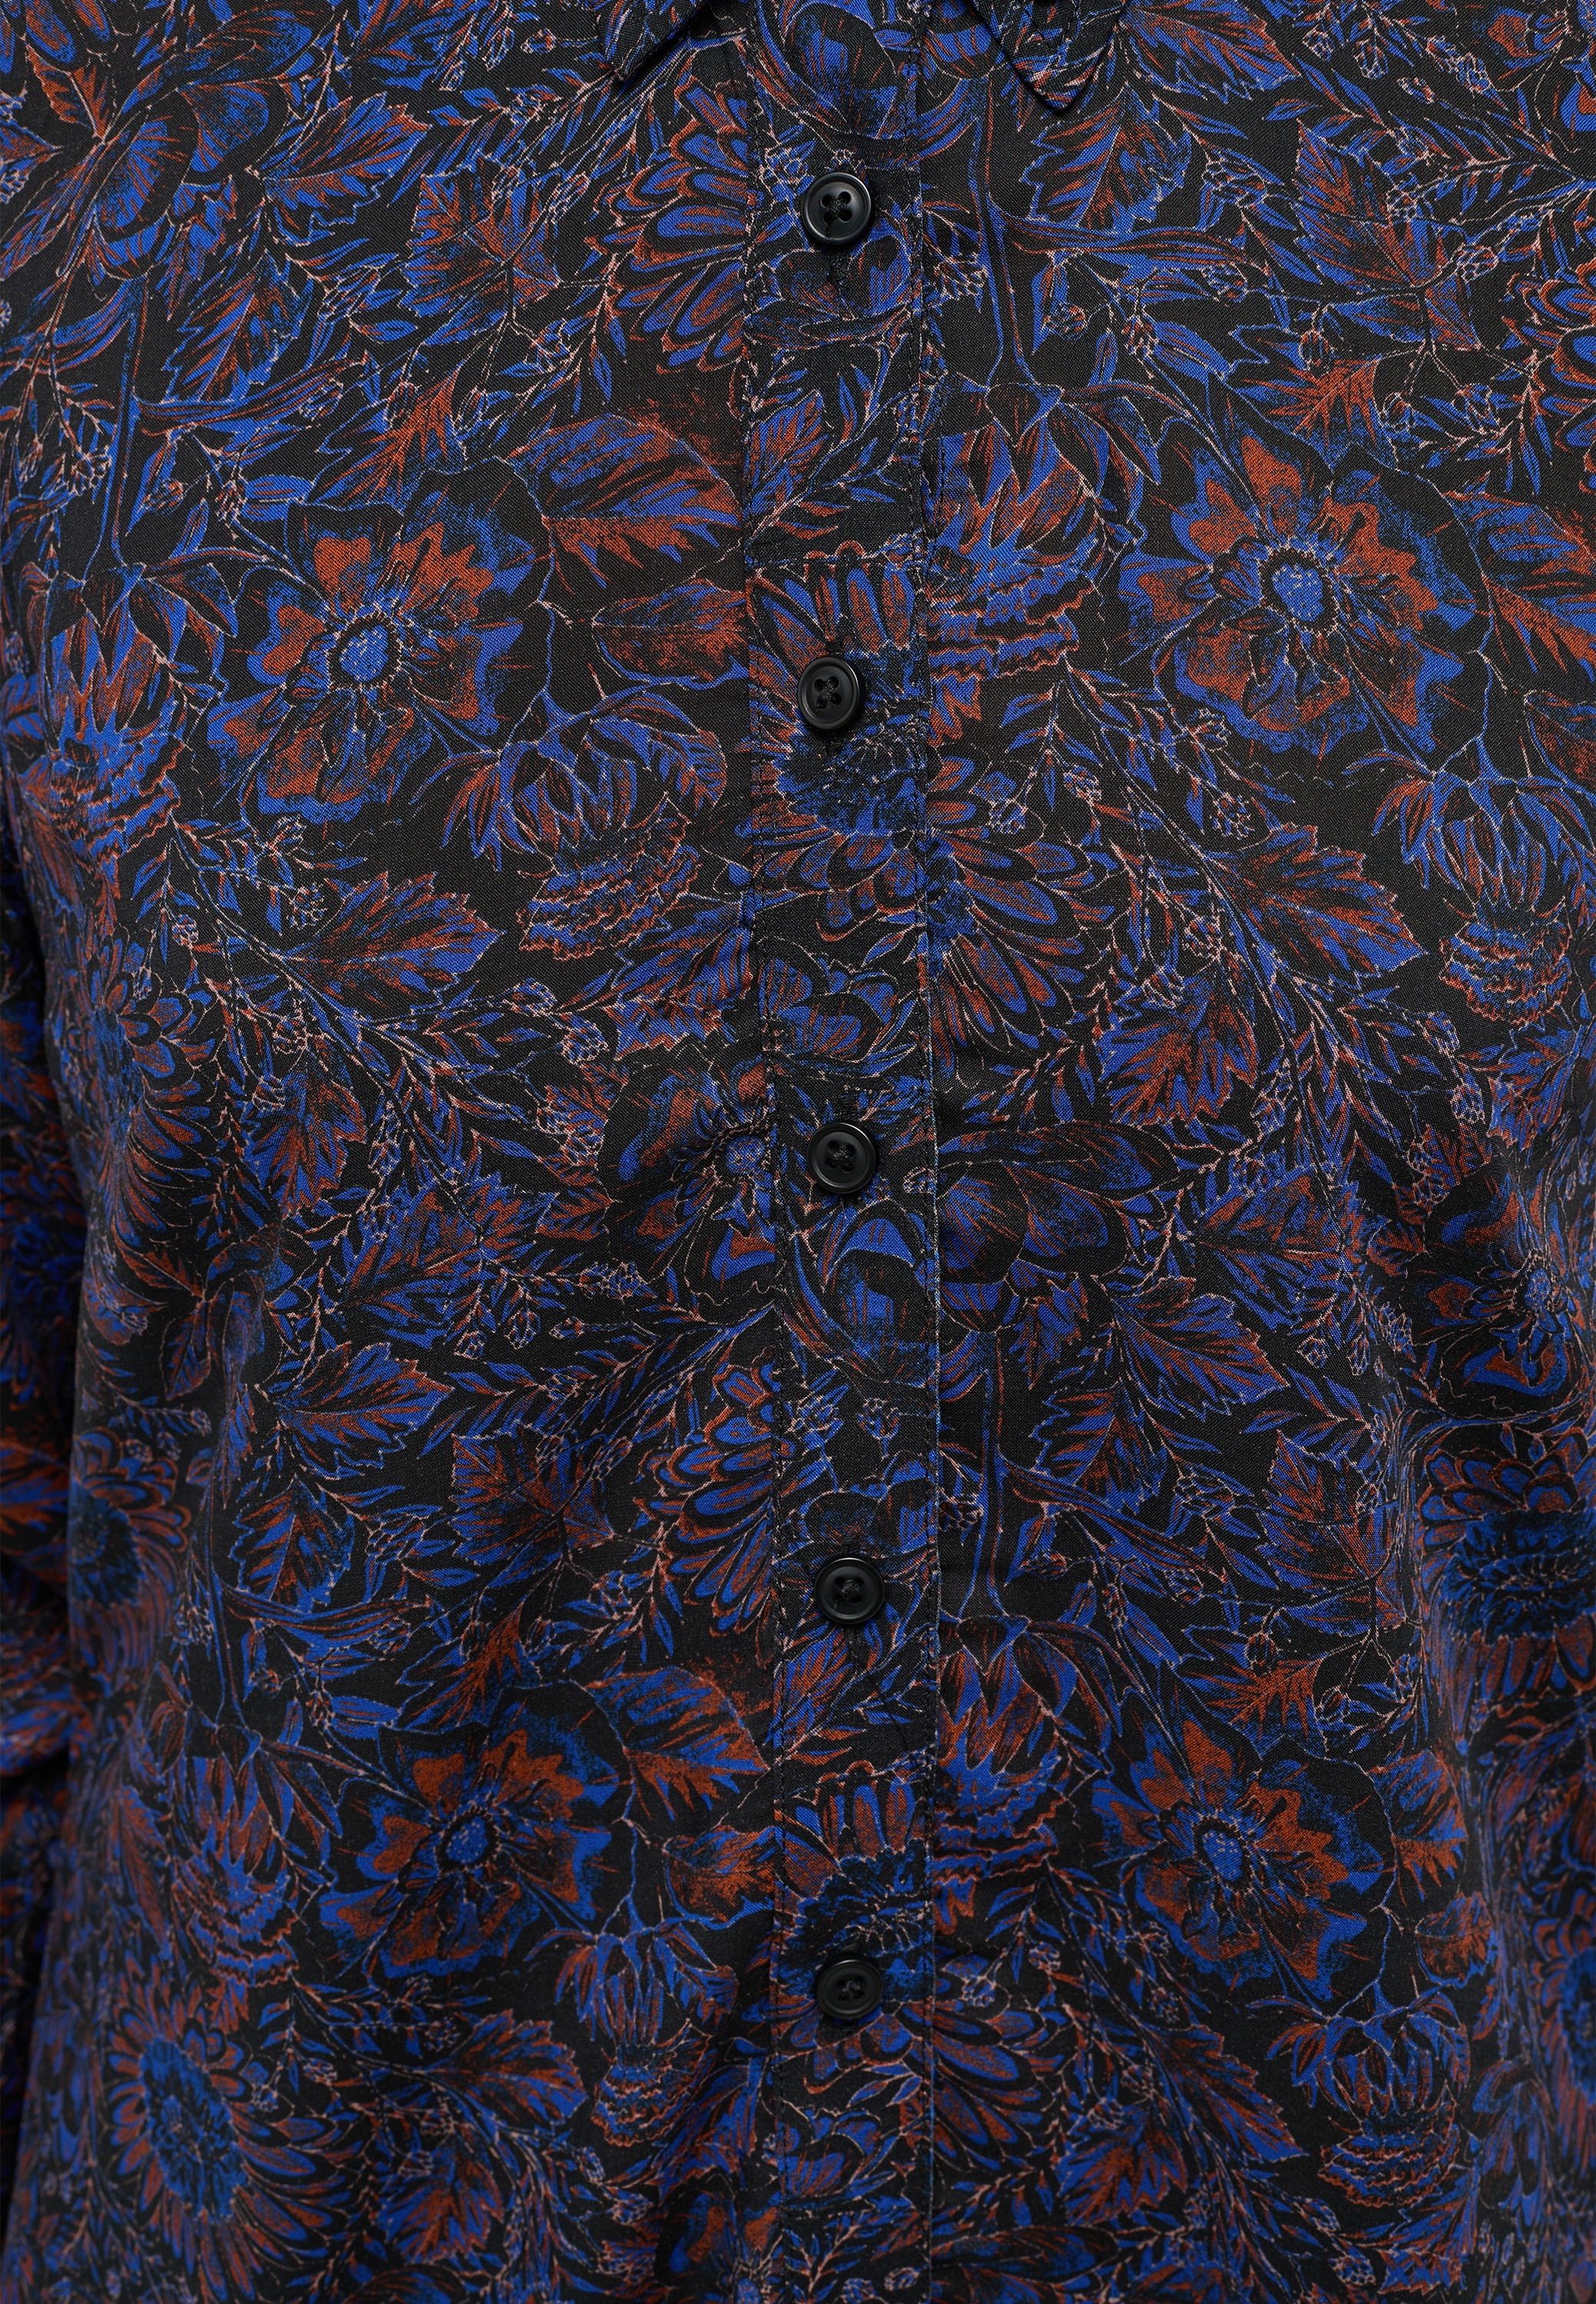 MUSTANG Langarmbluse »Bluse« kaufen online